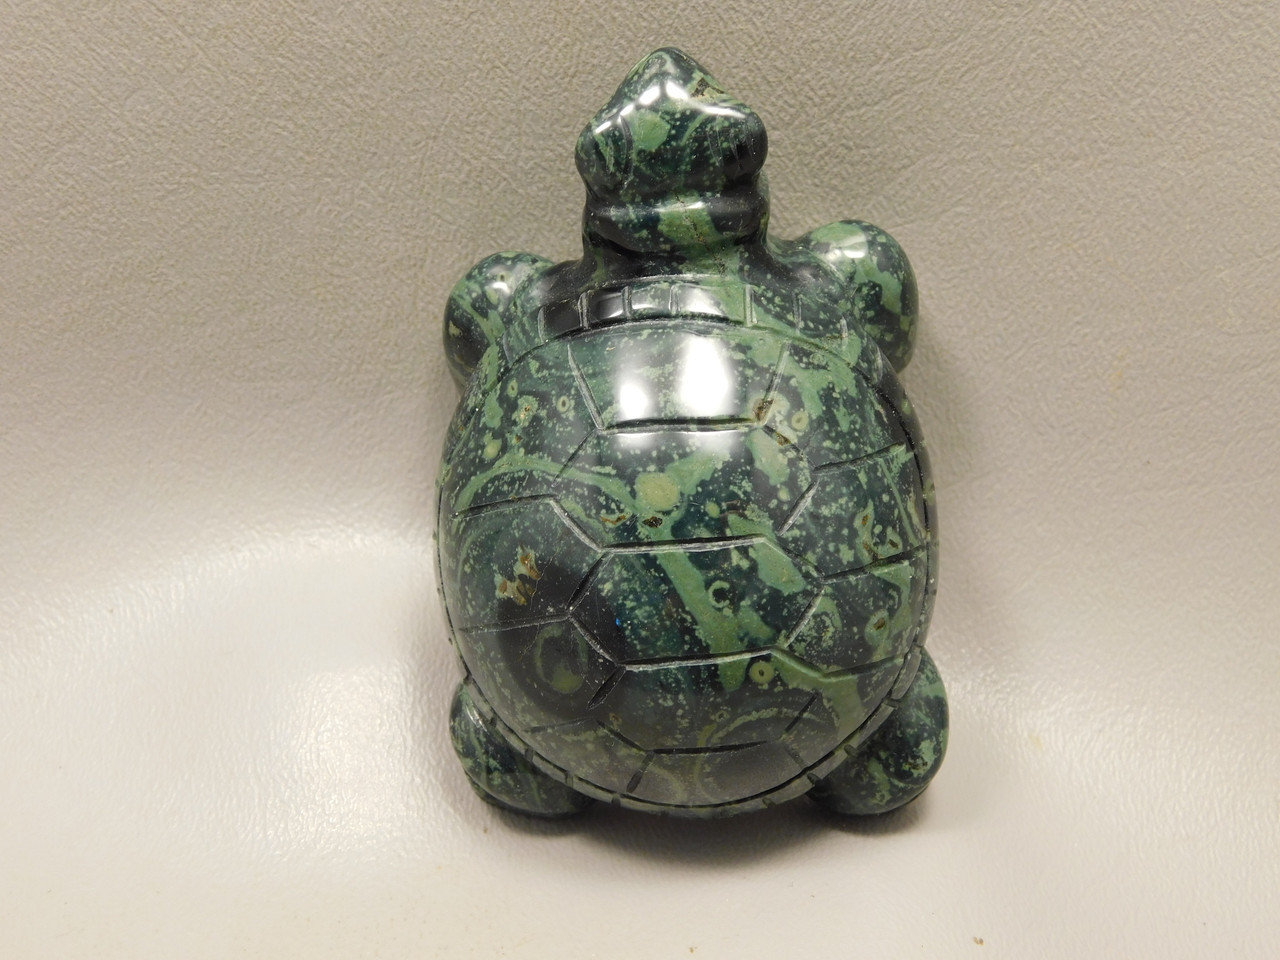 Turtle Figurine Kabamba Jasper 3.2 inch Gemstone Animal Carving #O143